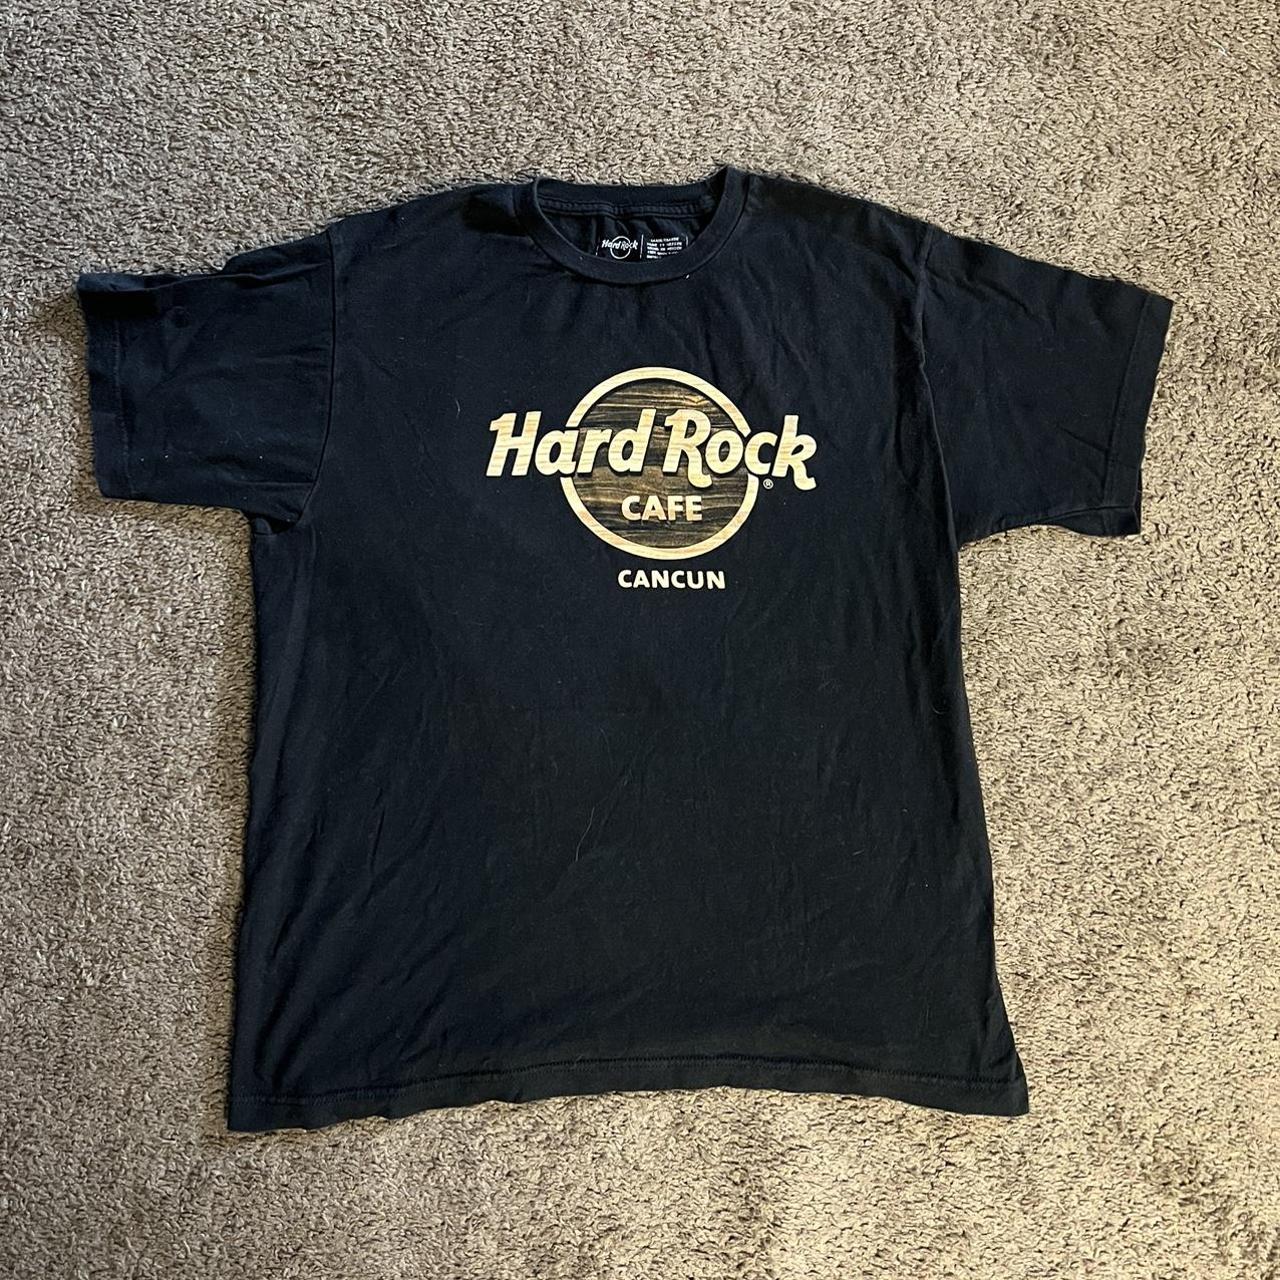 Hard Rock Cafe Cancun MEASUREMENT - Width (armpit... - Depop